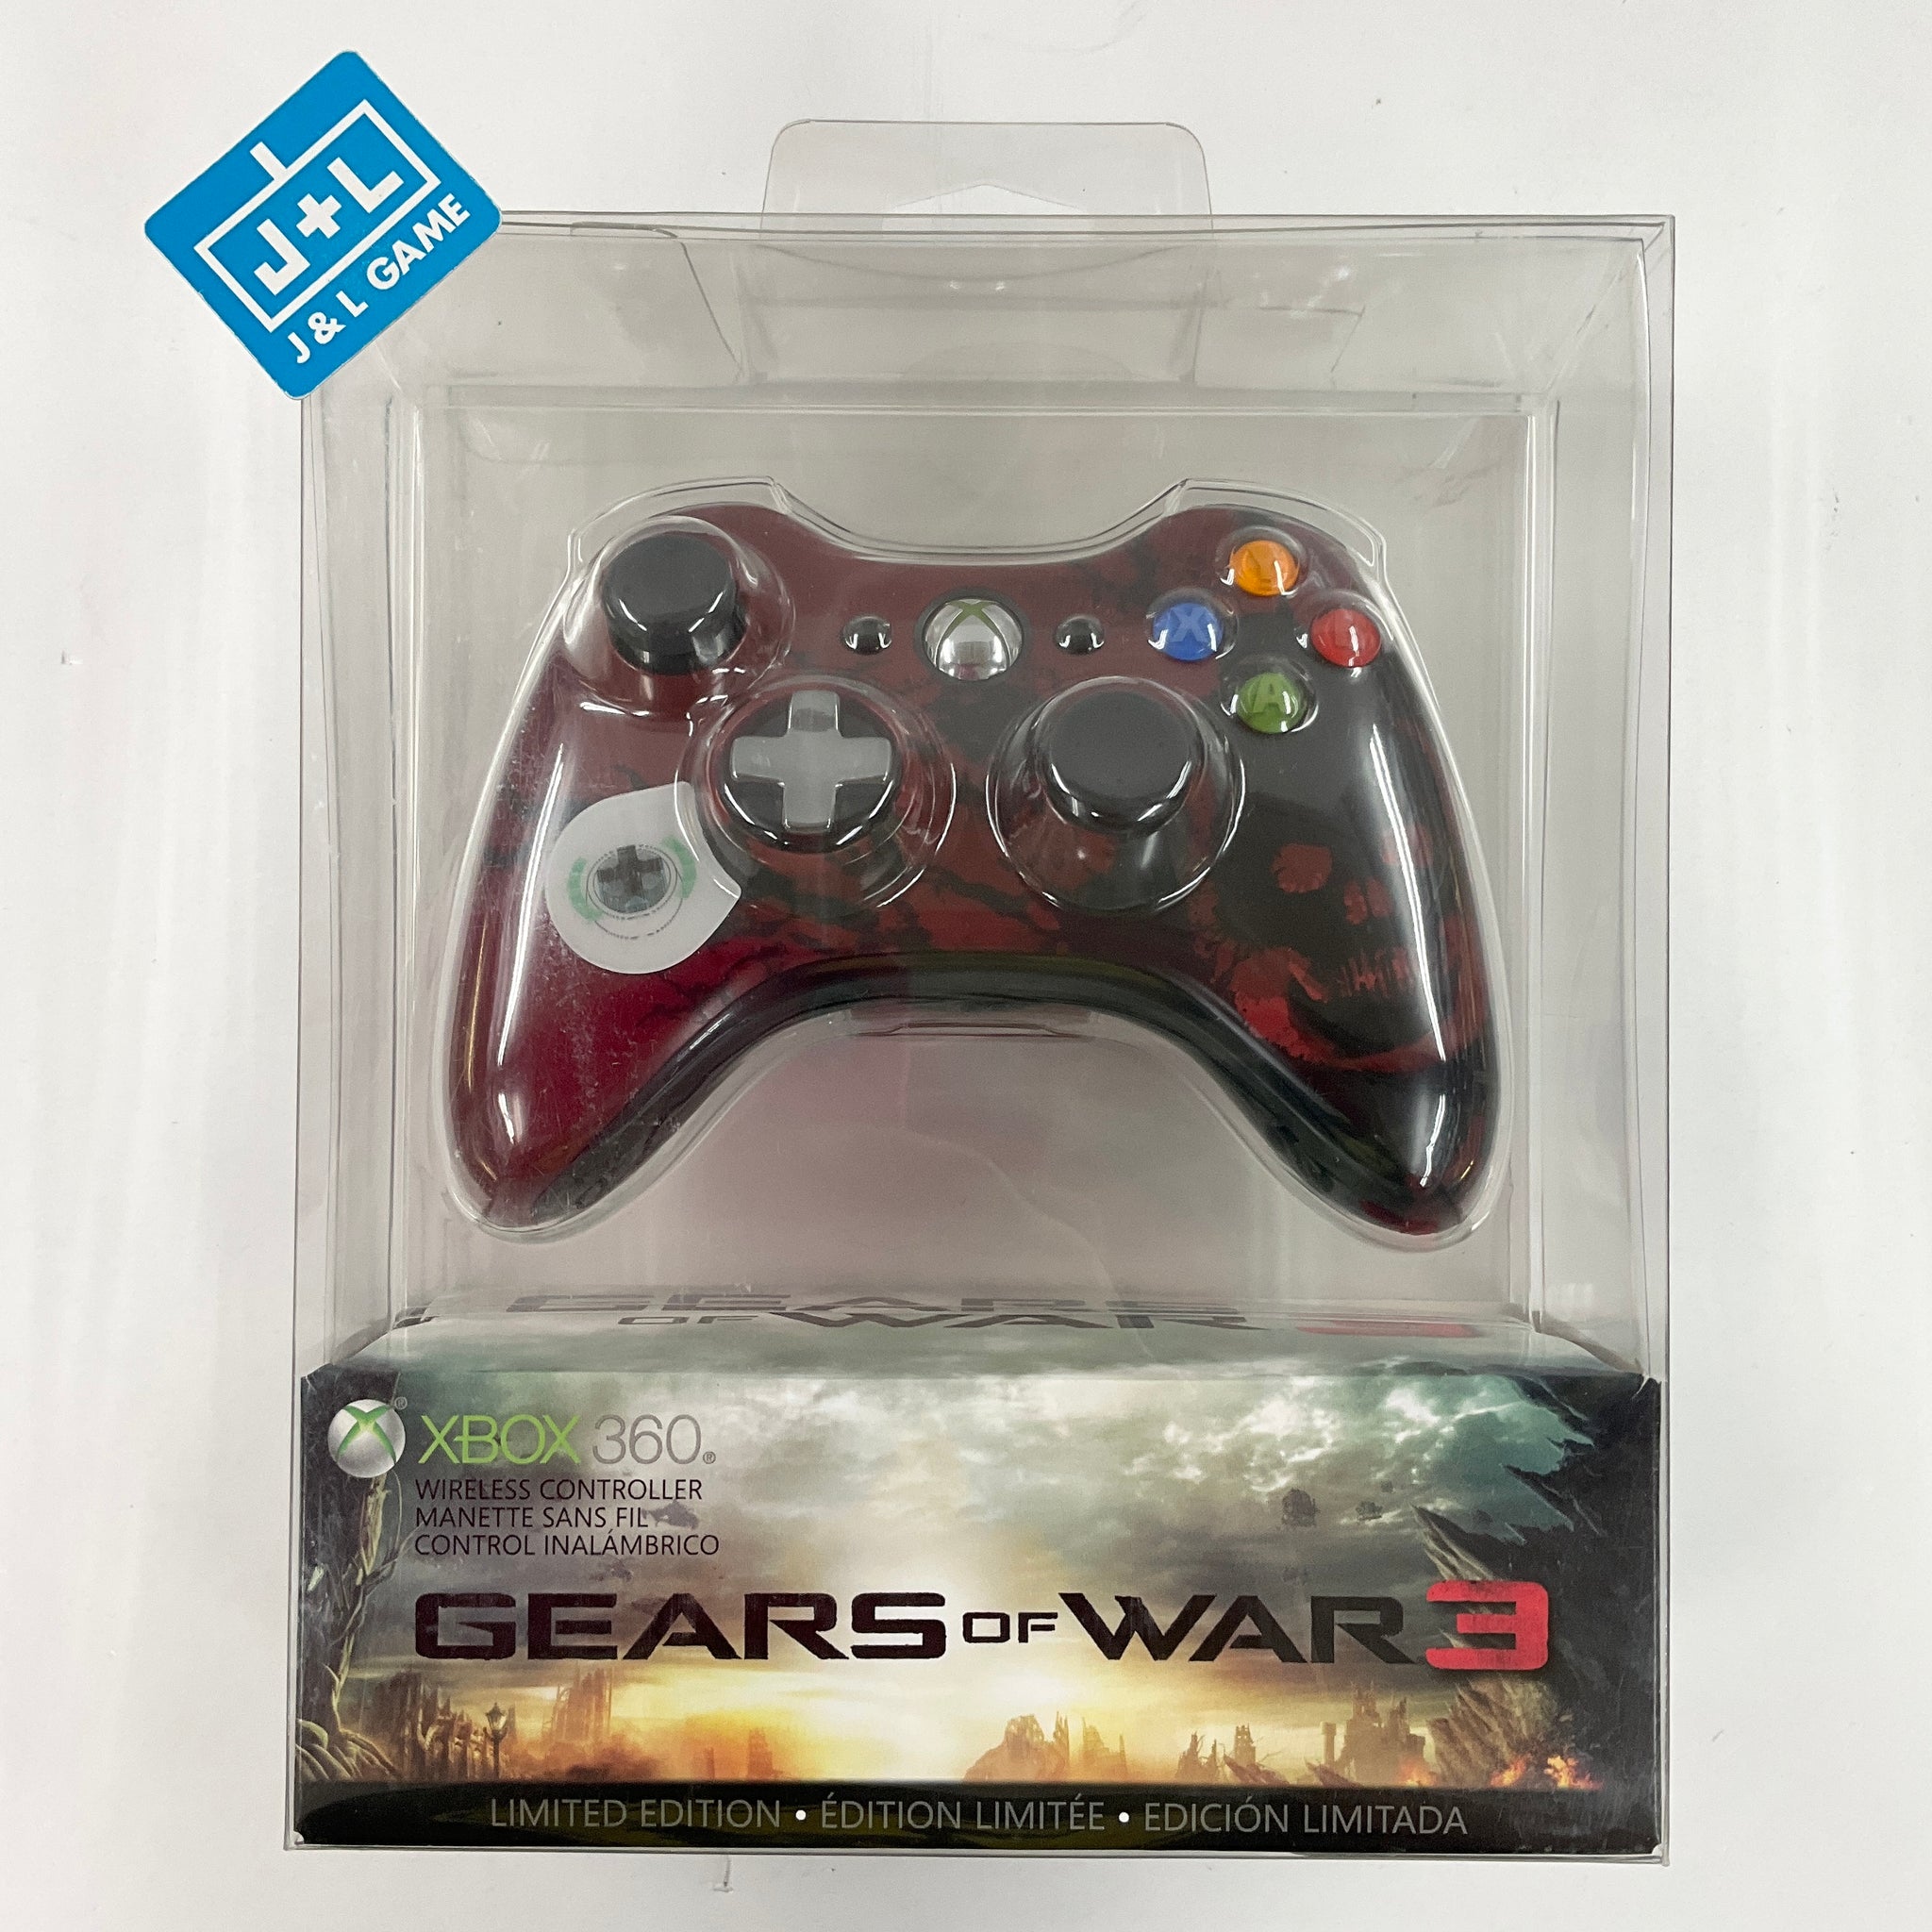 Gears of War 3 Xbox 360 Online Multiplayer in 2020 - STILL ALIVE 